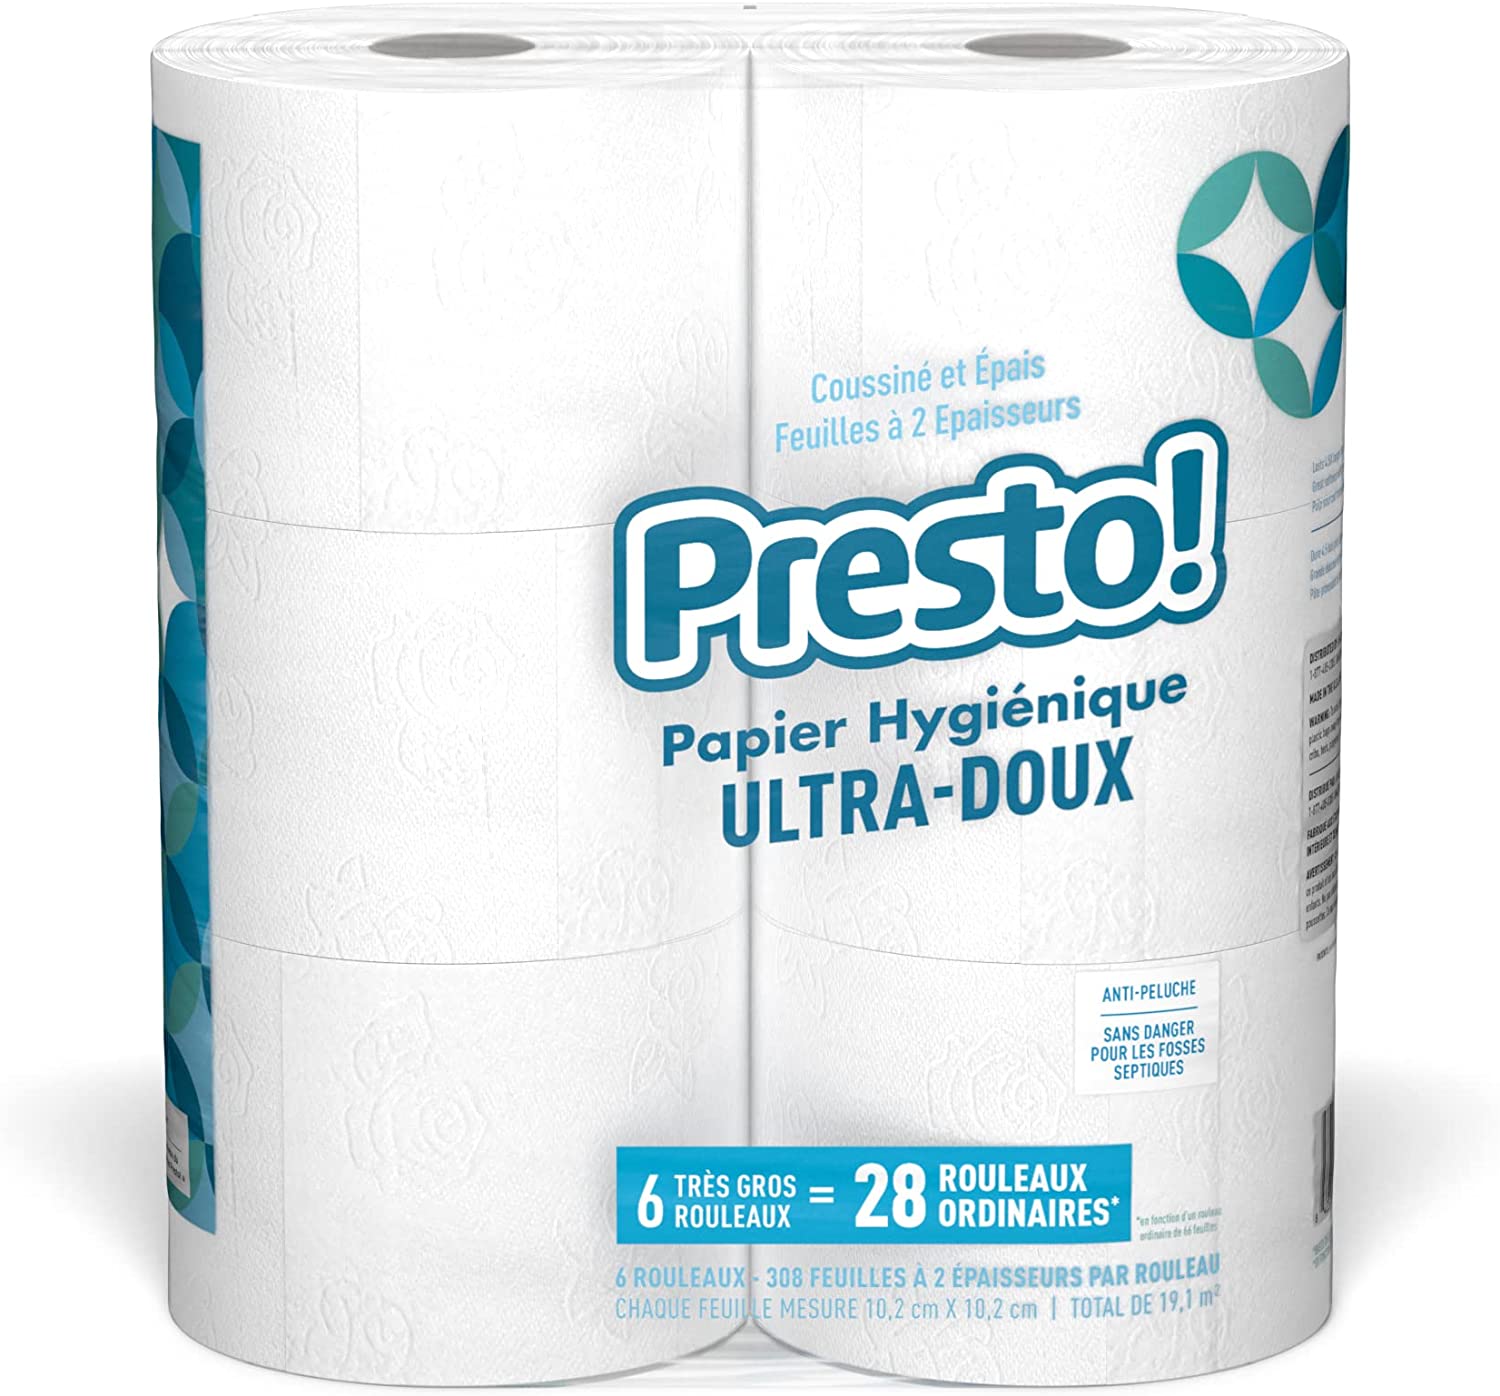 Presto! 308-Sheet Mega Roll Toilet Paper, Ultra-Soft, 6 Count